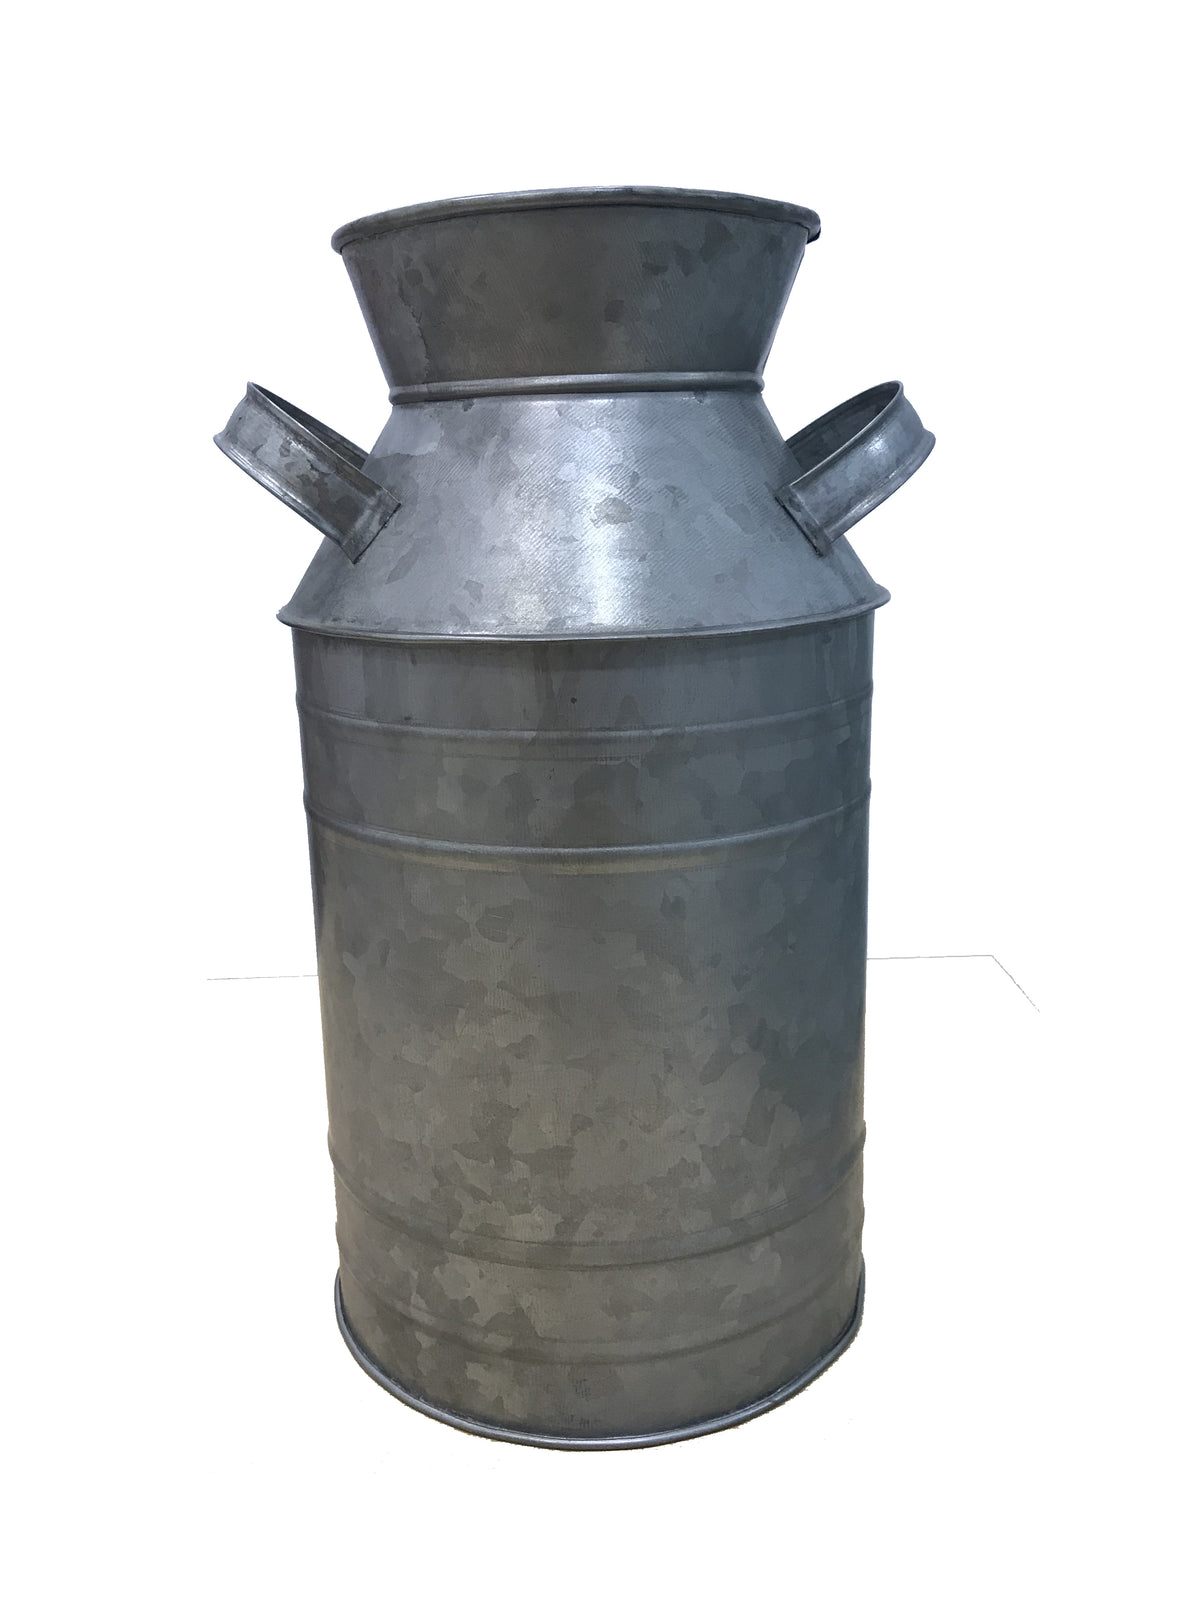 Countryside Galvanized Metal Milk Can Shape Pitcher, Gray - BM154506